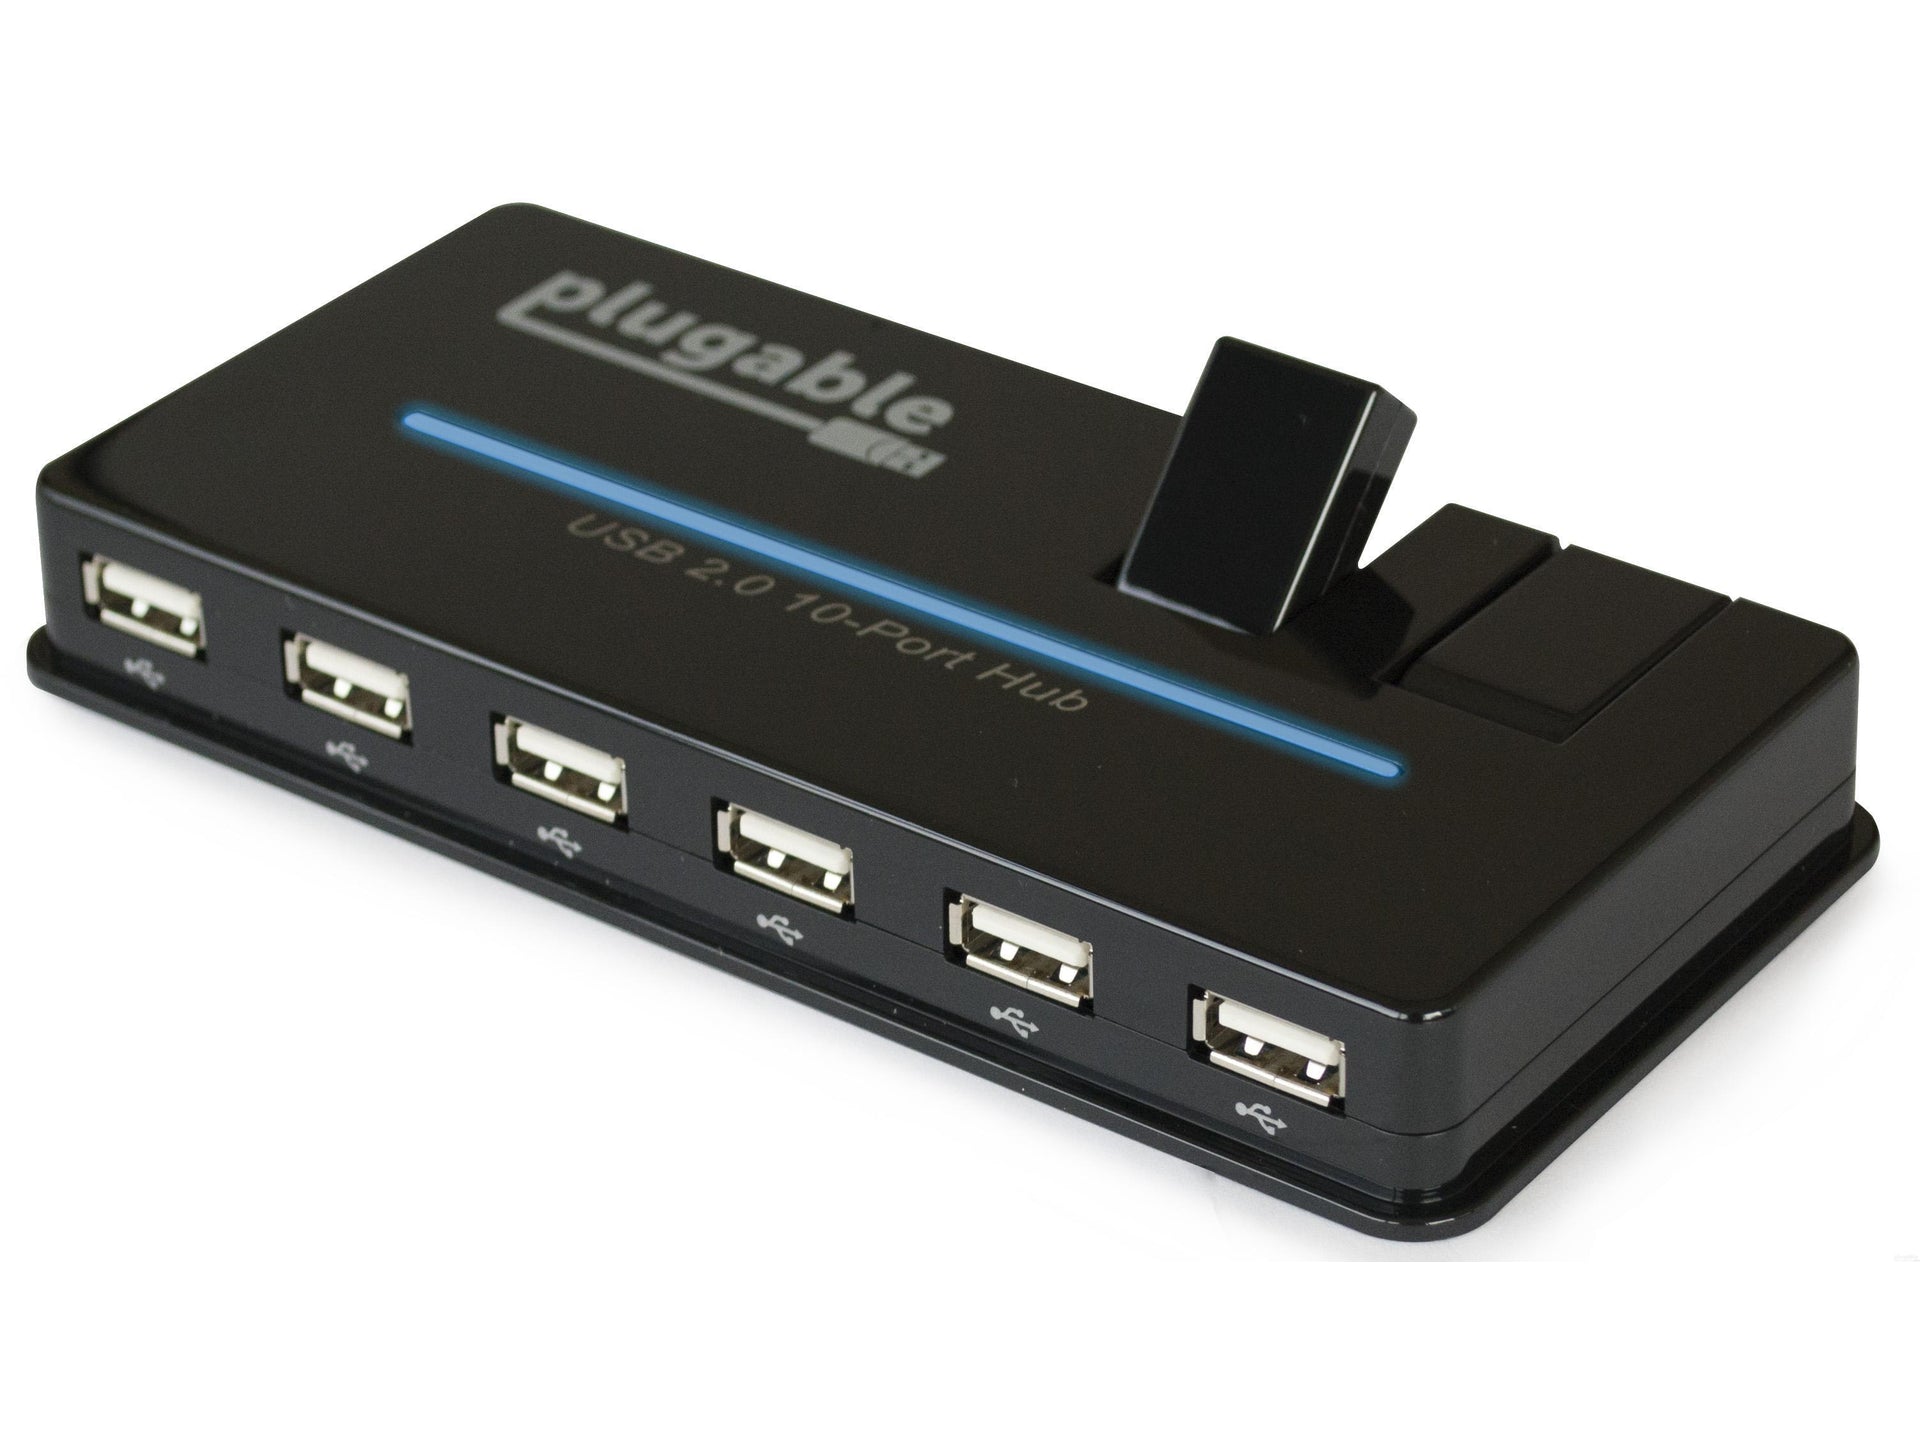 Plugable USB 2.0 10-Port Hub with Power Adapter – Plugable Technologies